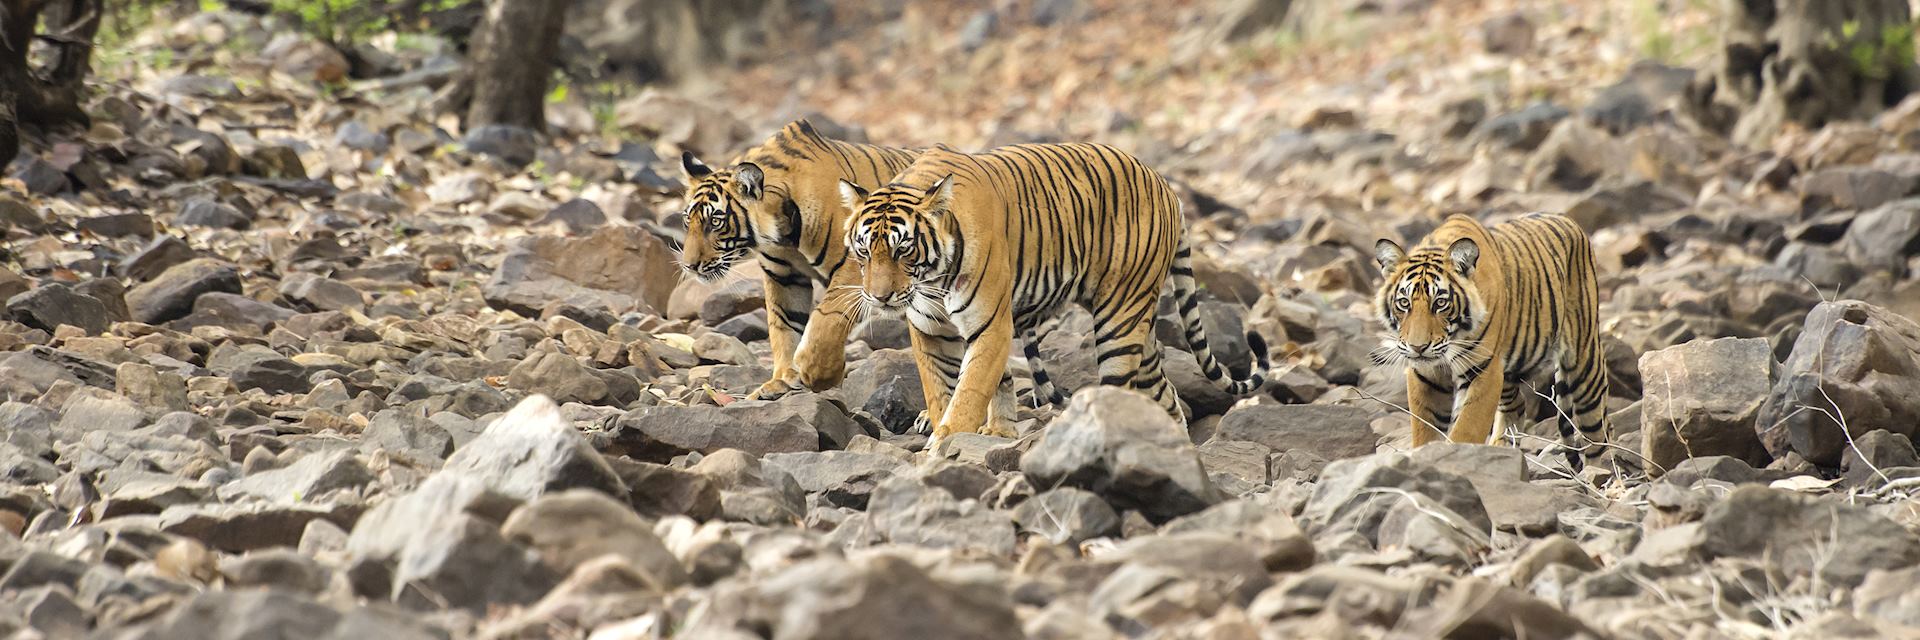 Tigers, Ranthambhore National Park